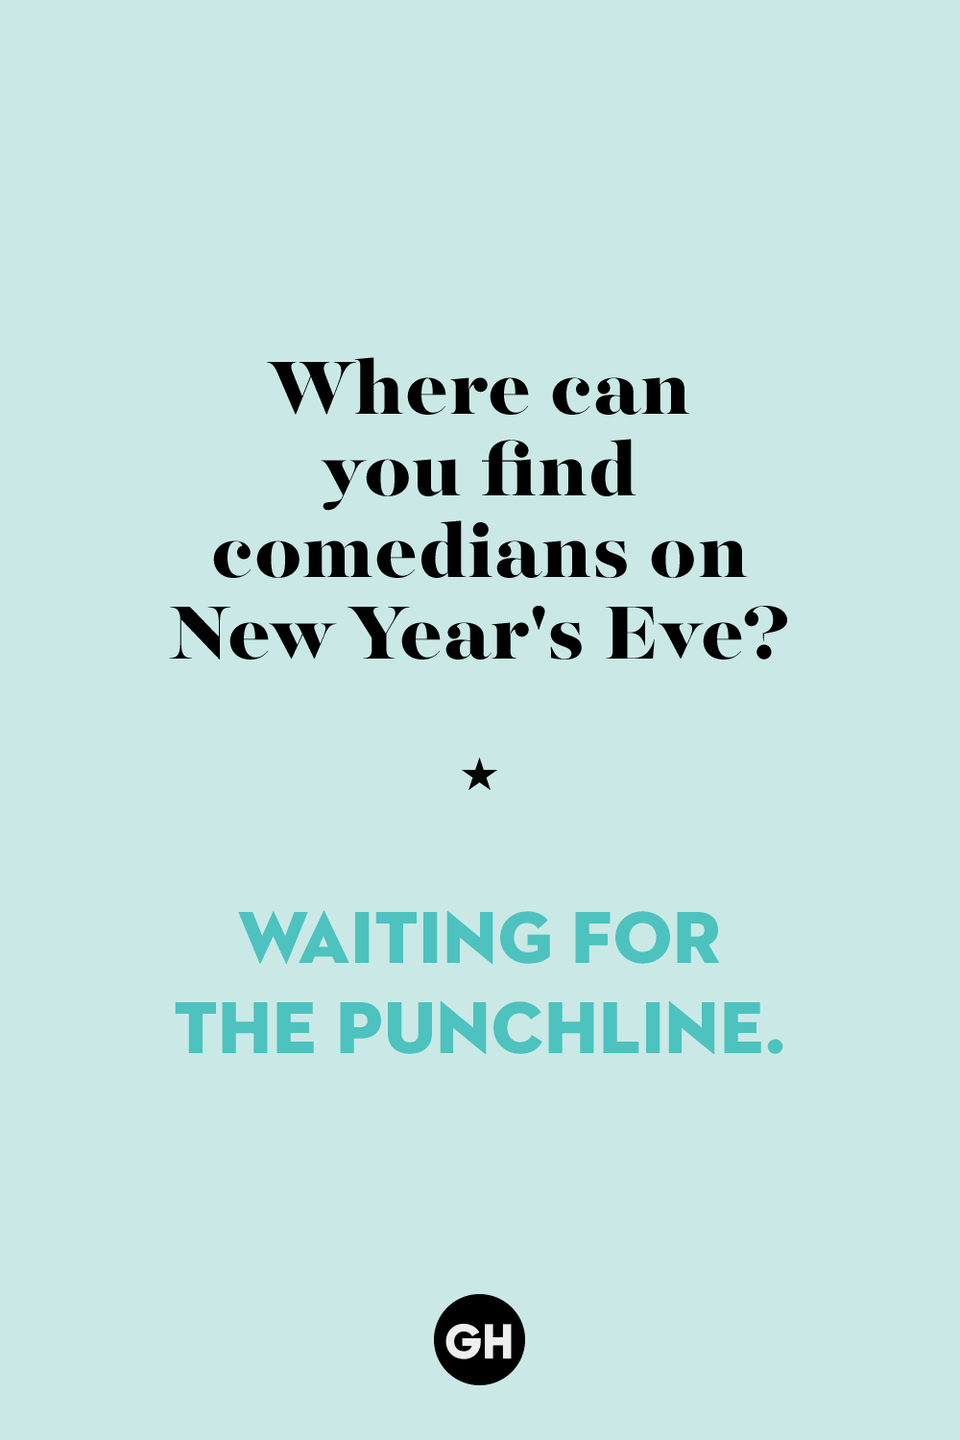 Best New Year's Jokes 2020